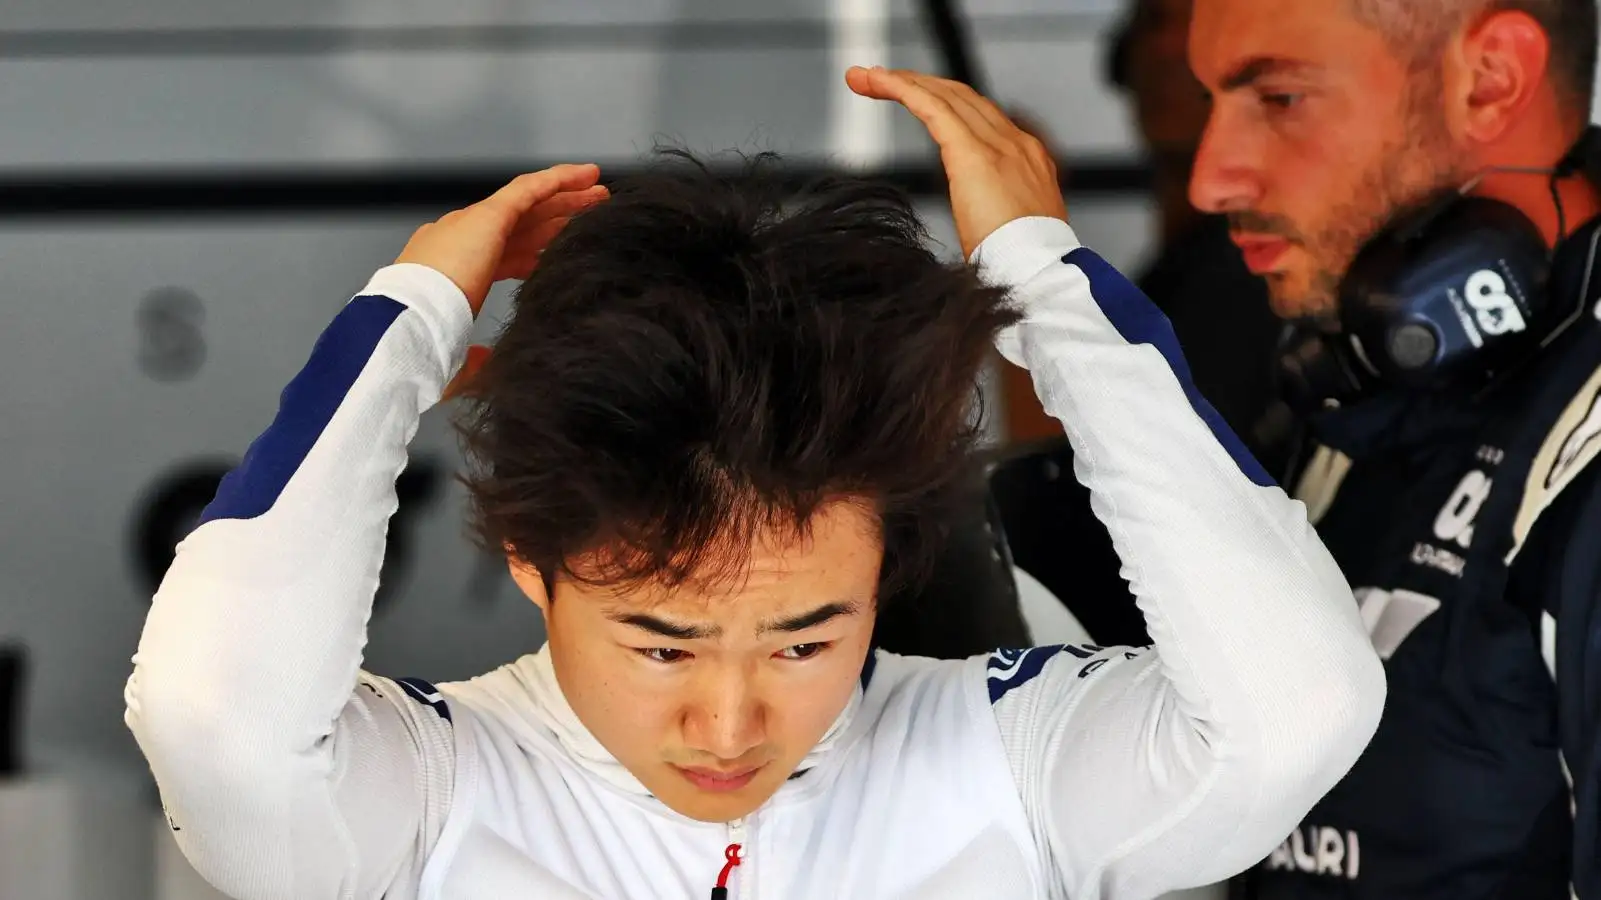 Yuki Tsunoda ruffling his hair. Paul Ricard July 2022.